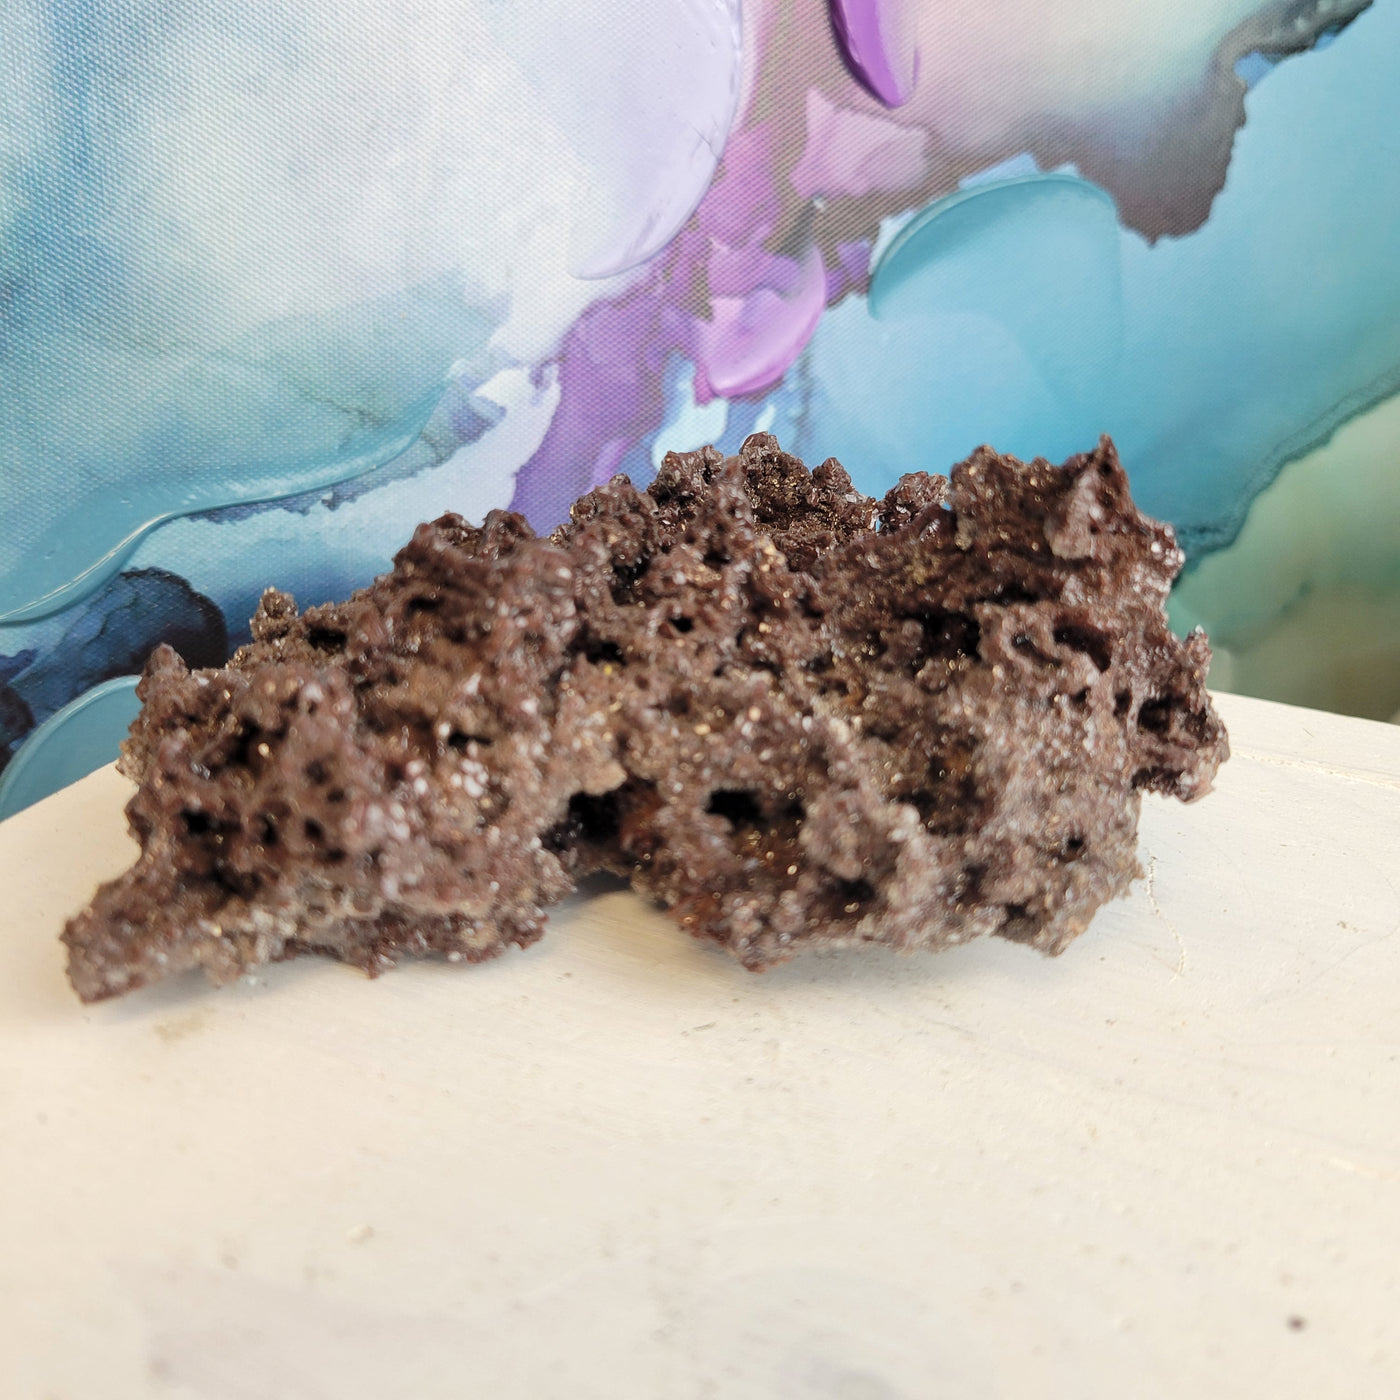 Hematite Druzy Calcite Cluster- Santa Eulalia